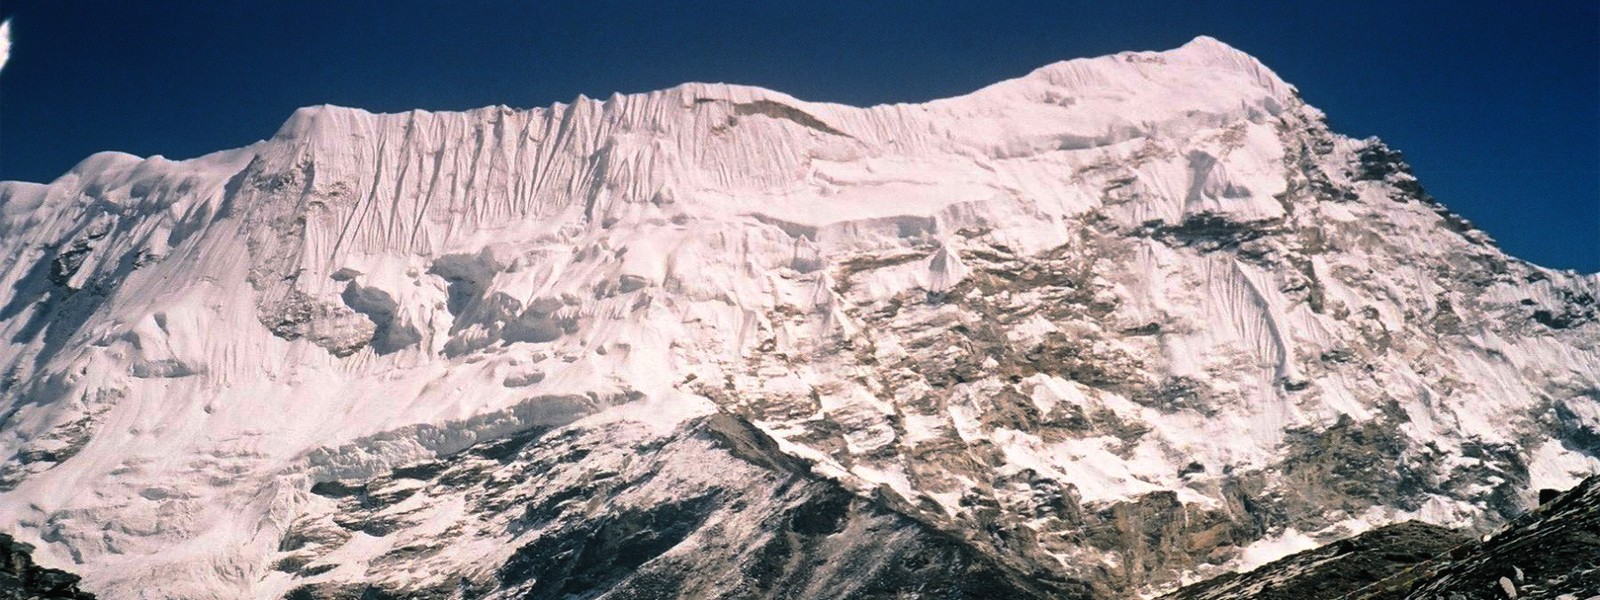 Gurja Himal Base Camp Trekking - Dhaulagiri Region